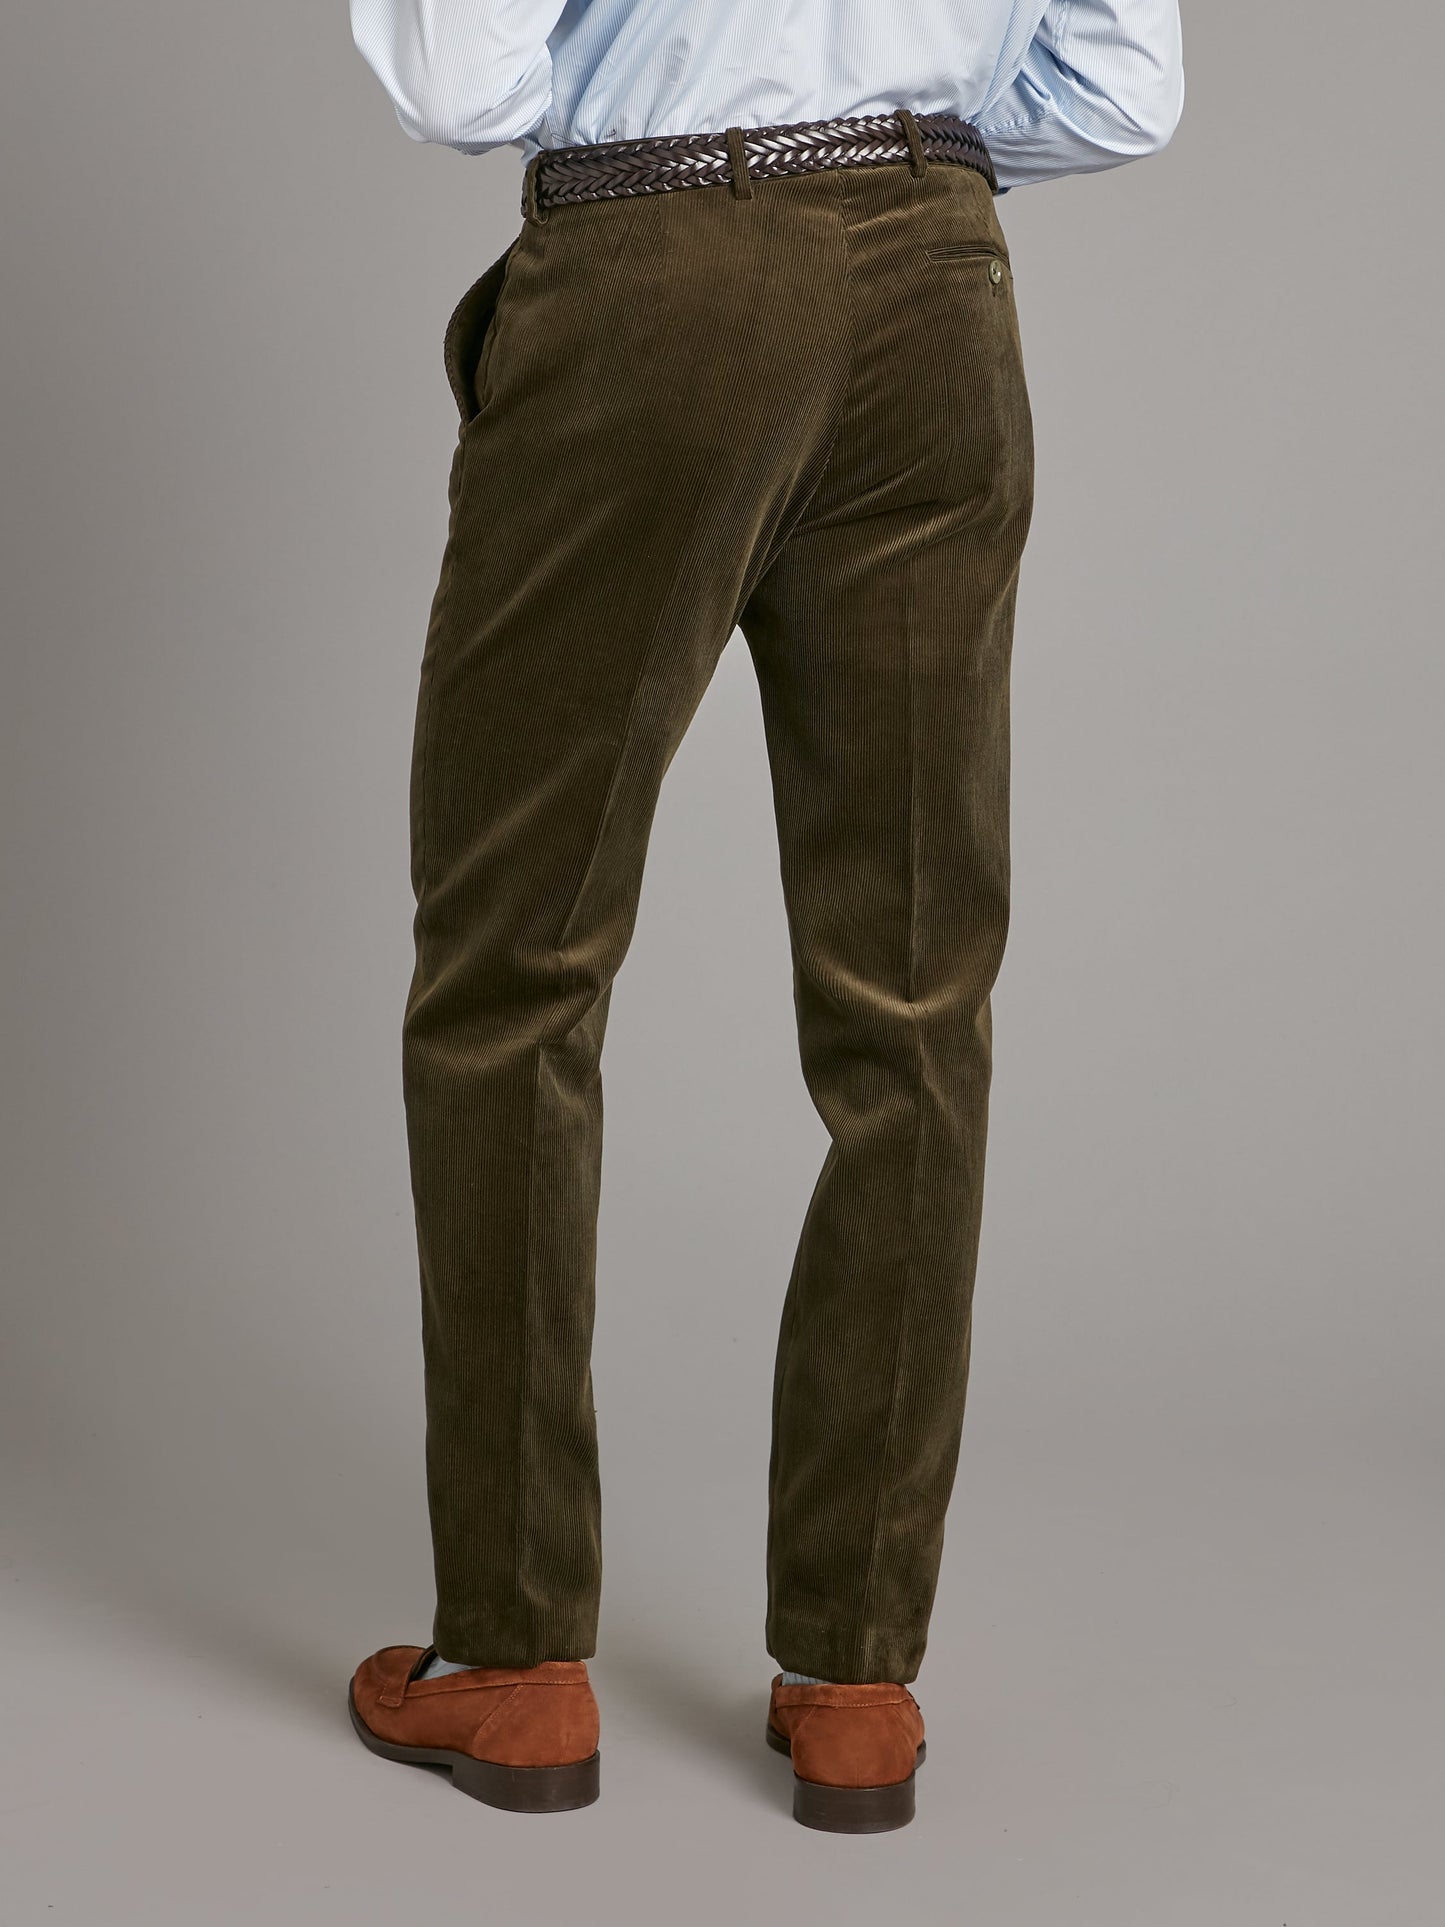 needlecord trousers dark olive 2